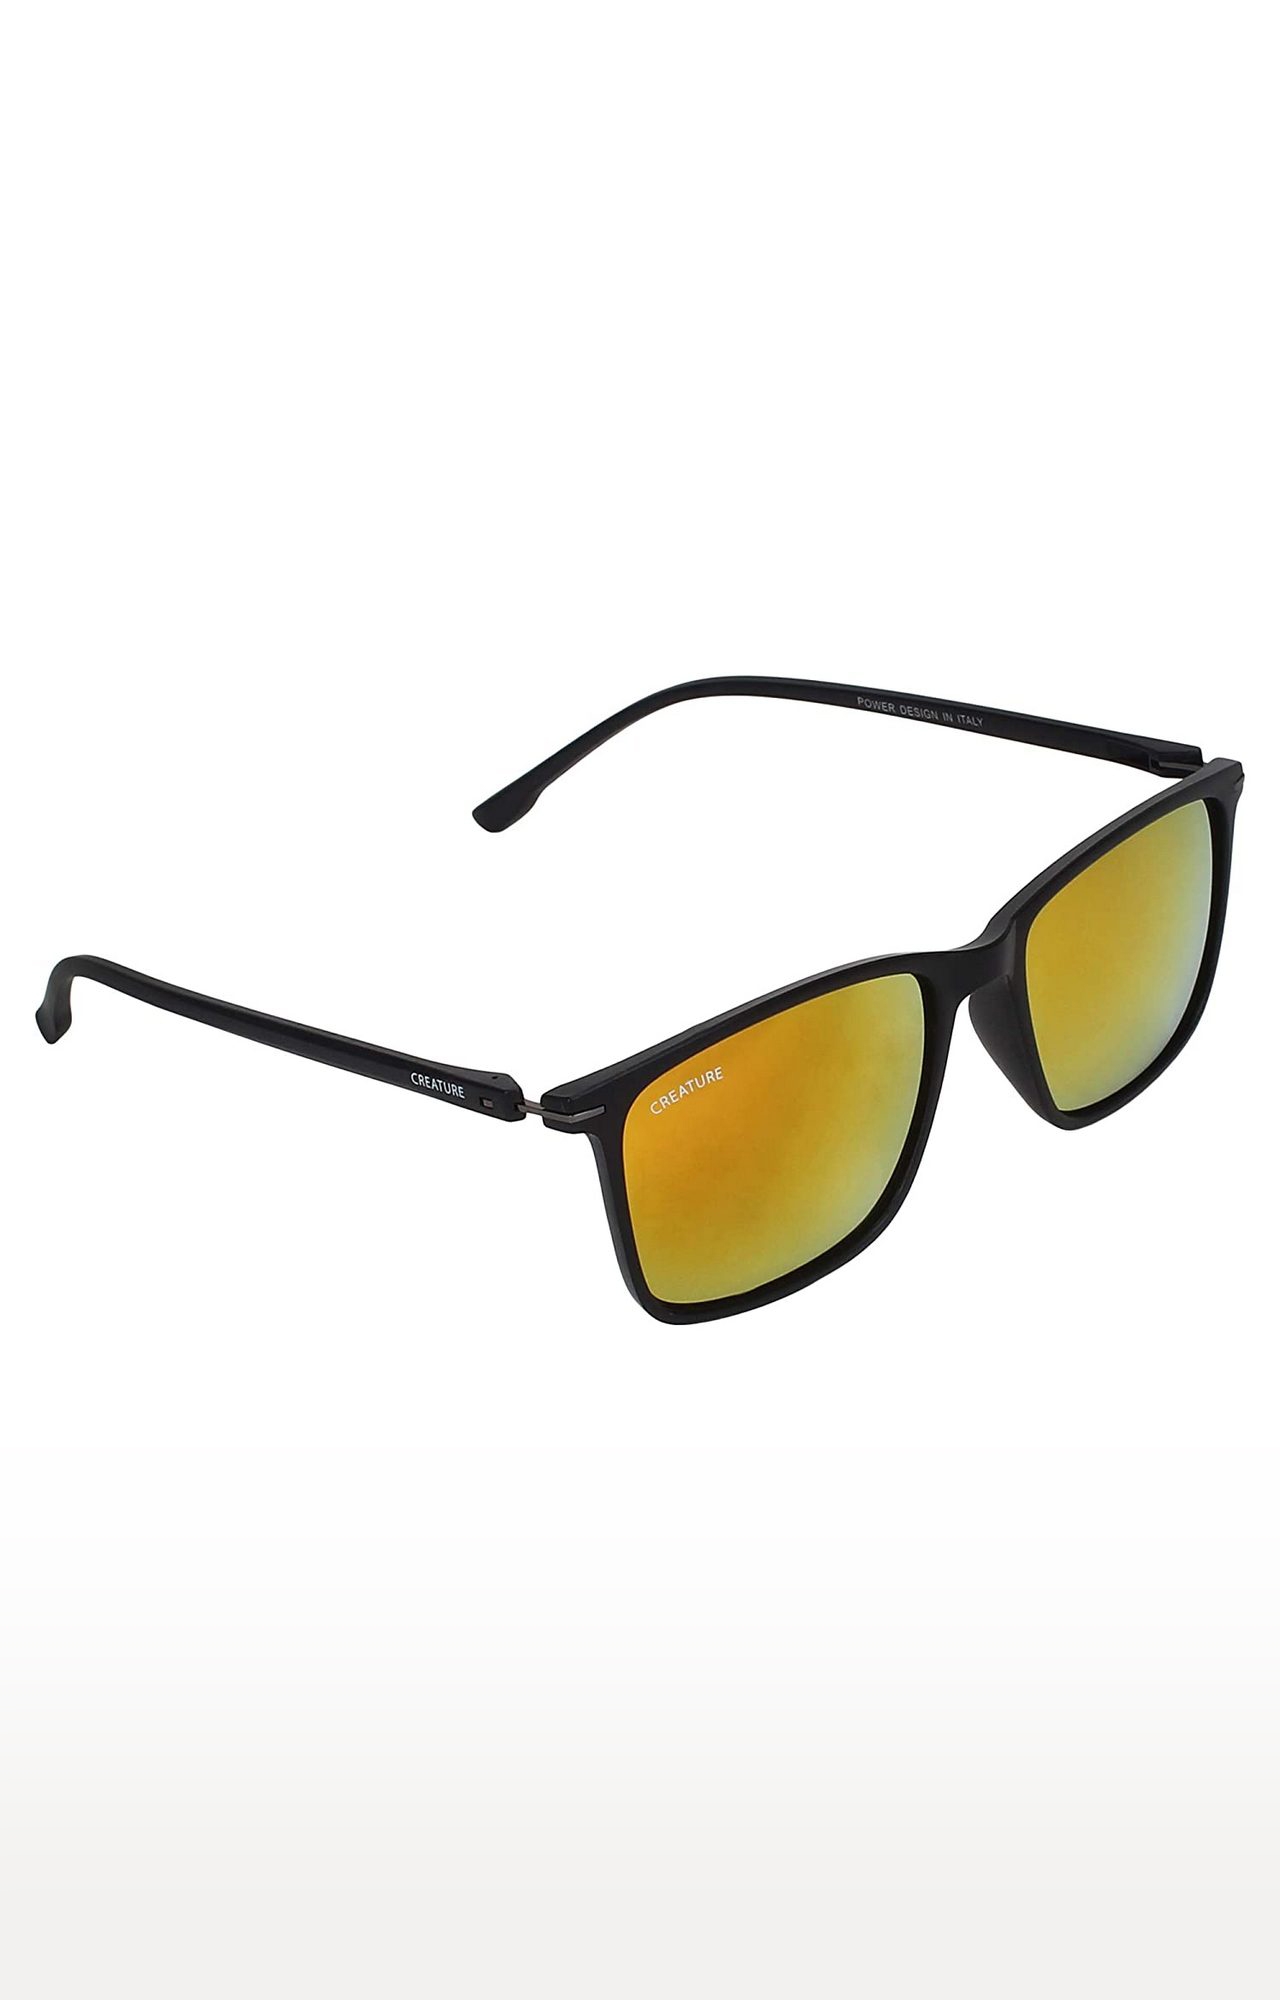 CREATURE | CREATURE Matt Finish Club Master UV Protected Sunglasses (Lens-Yellow|Frame-Black)